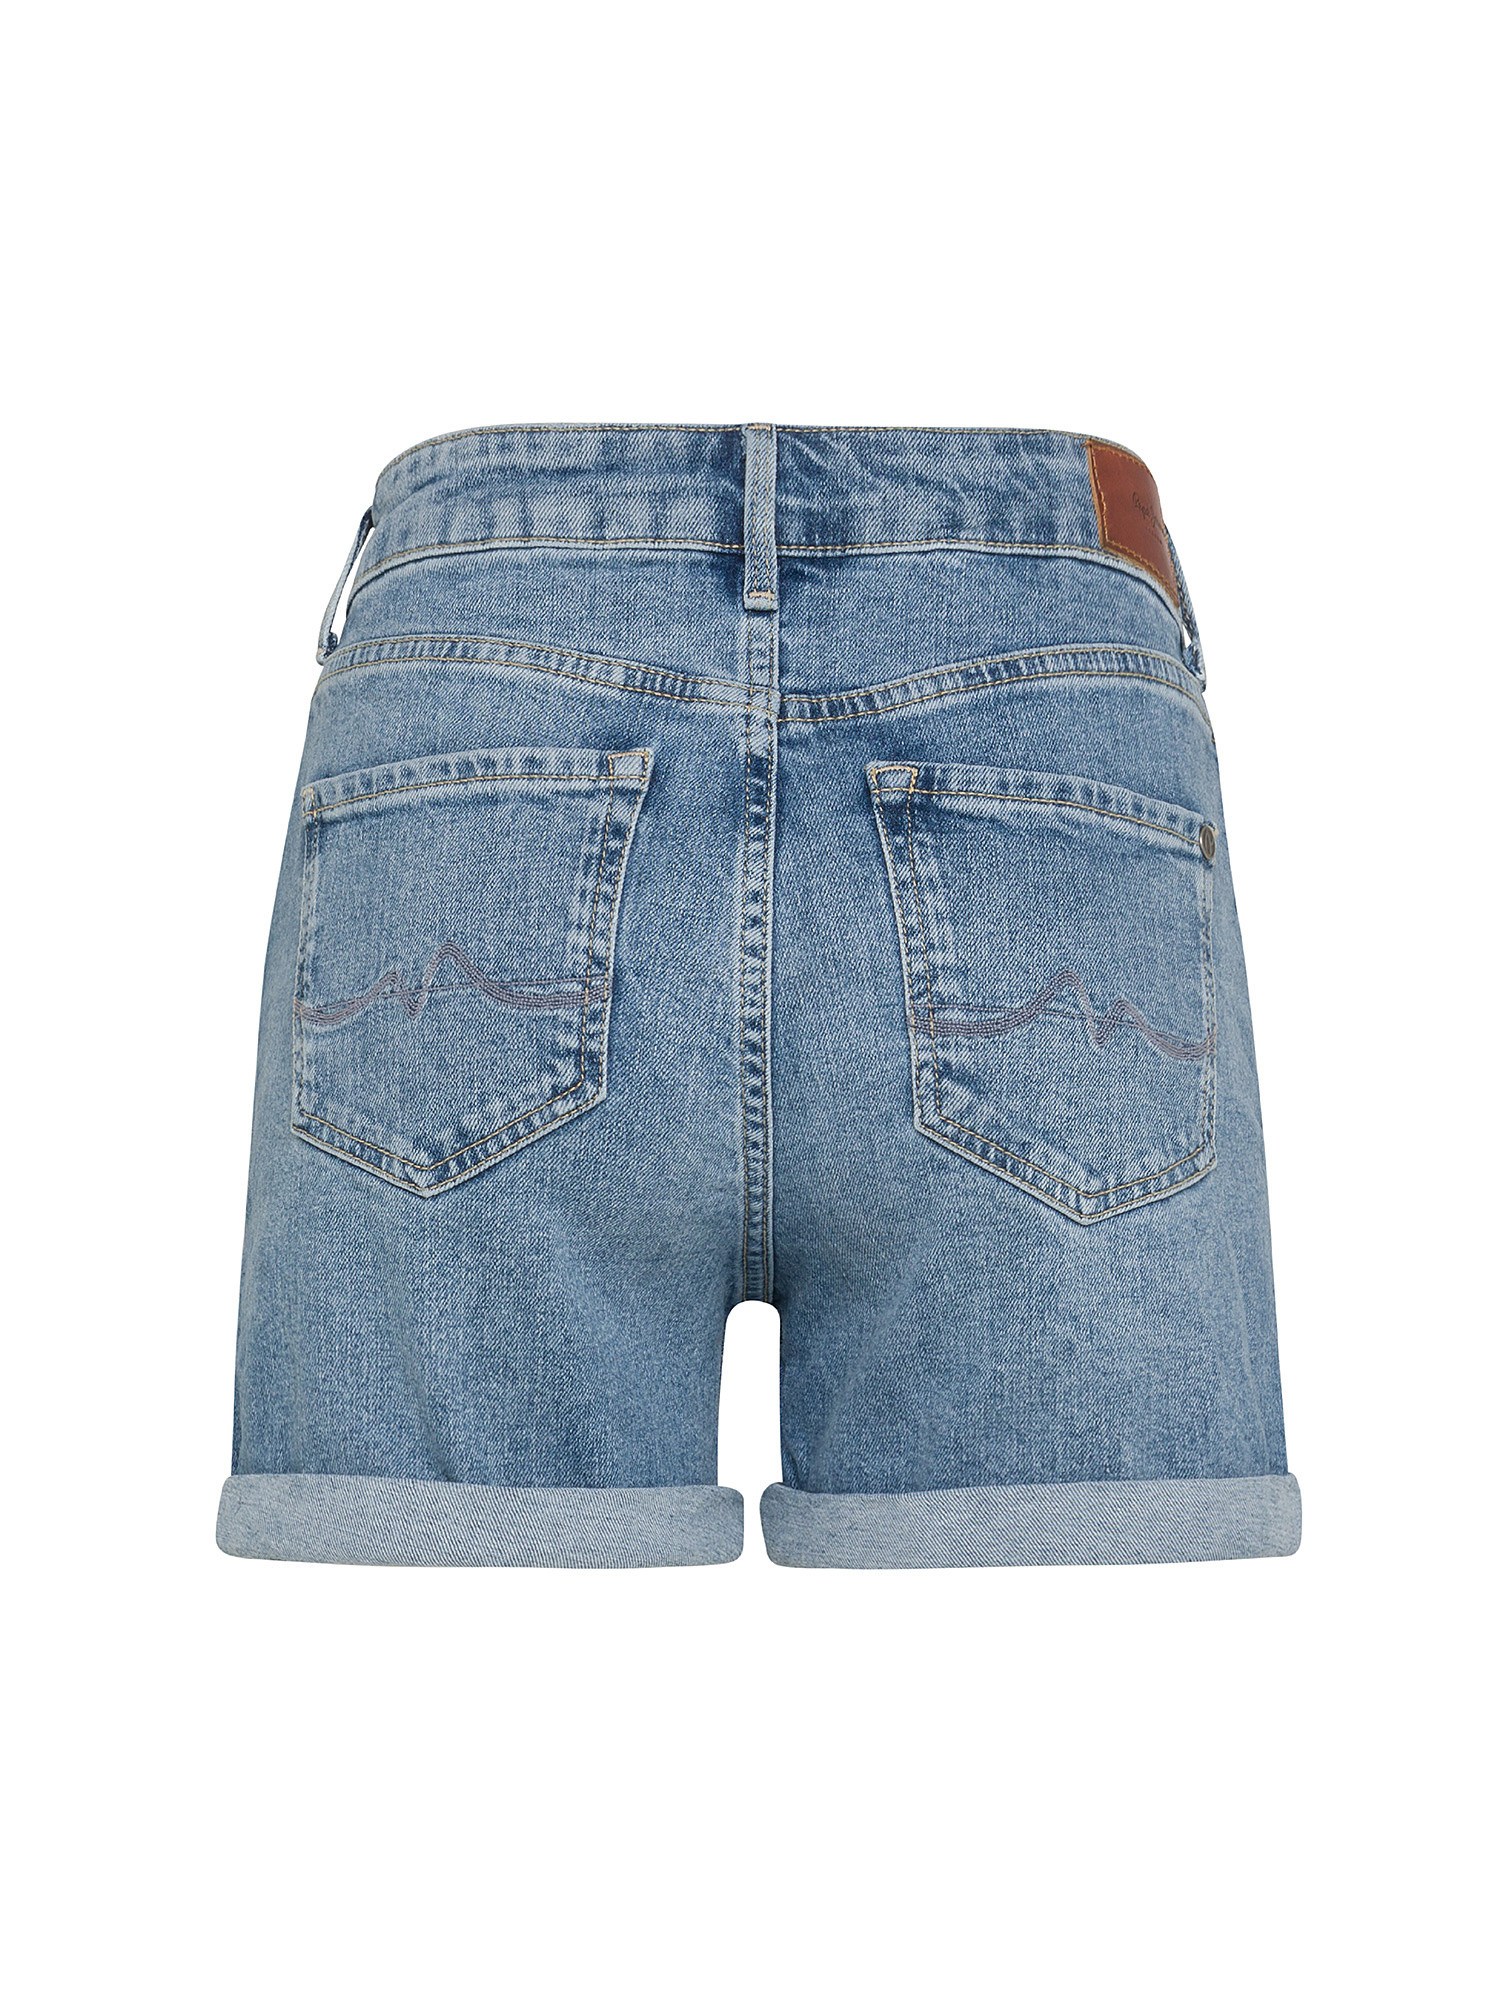 Pepe Jeans - Pantaloncini cinque tasche in denim, Denim, large image number 1